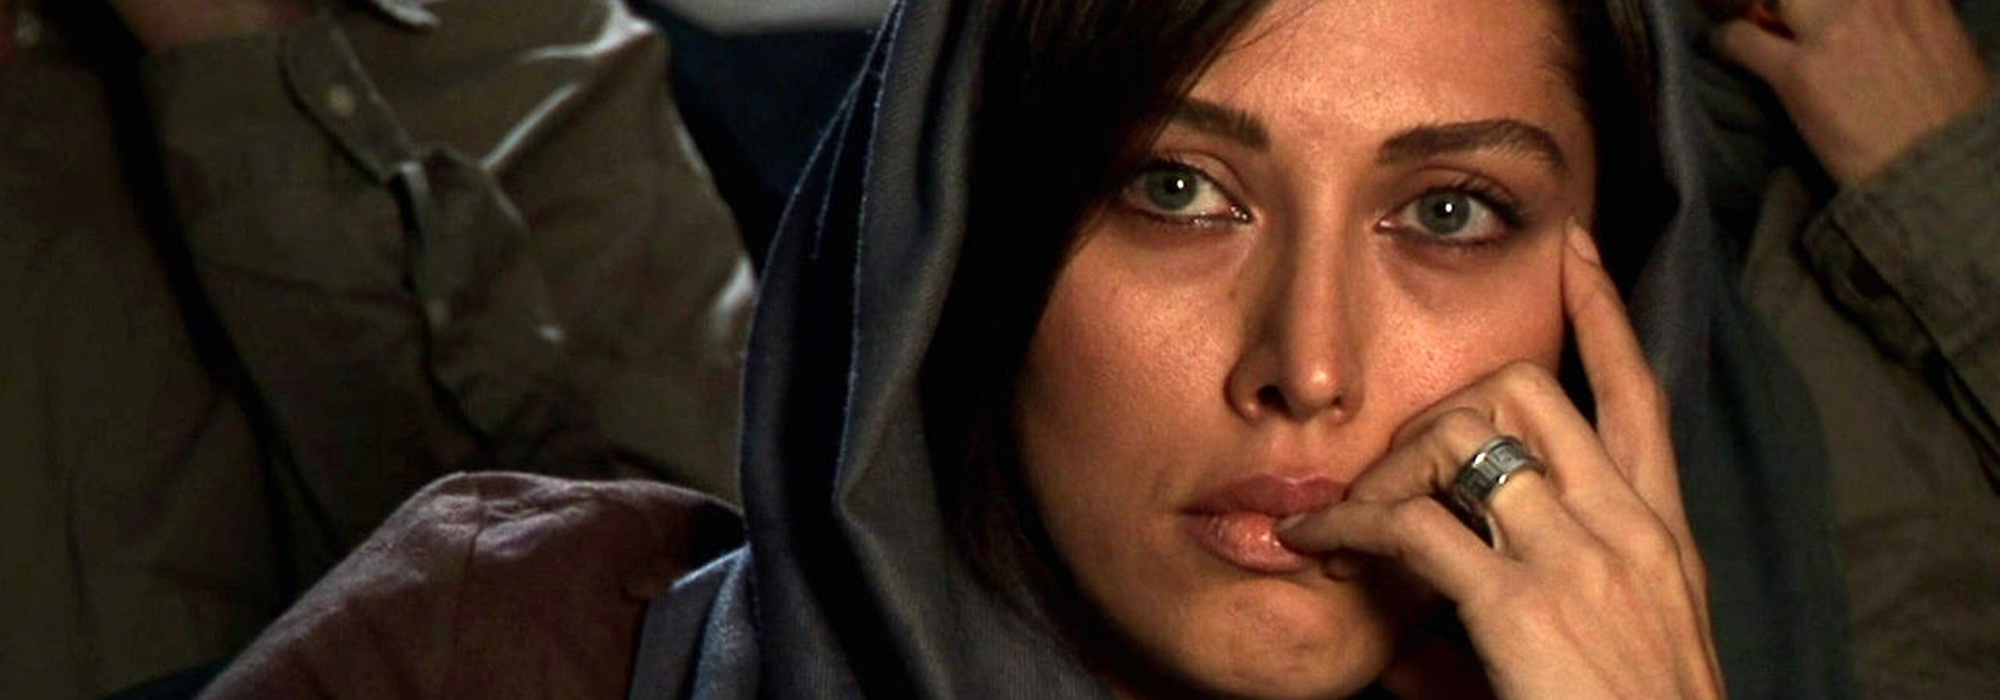 A still from Abbas Kiarostami's film Shirin.